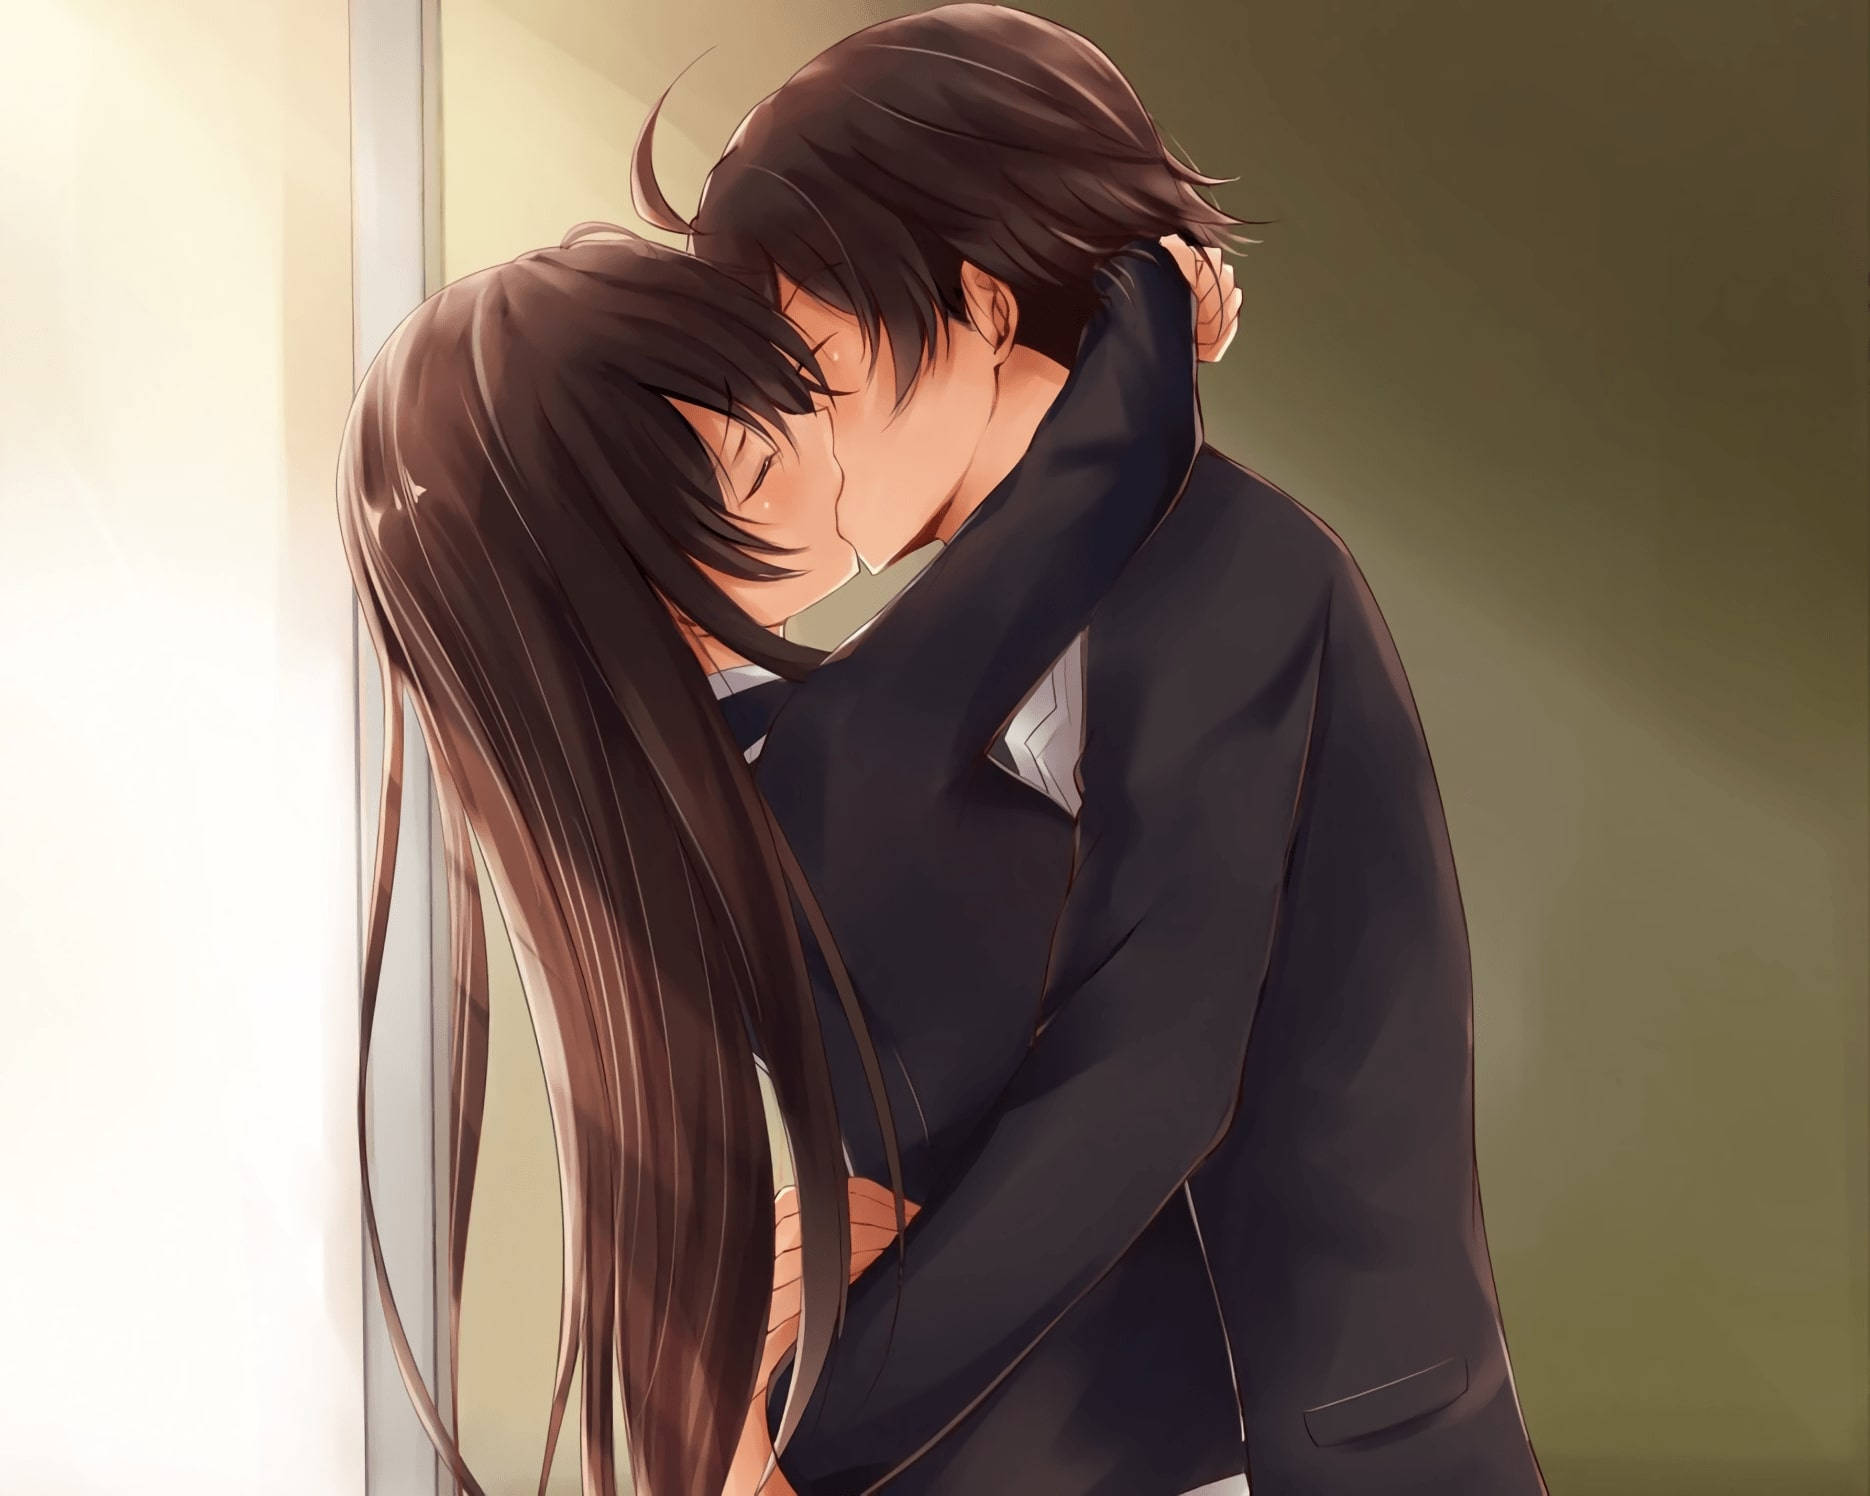 Anime Couple Kiss In School Uniform Wallpaper